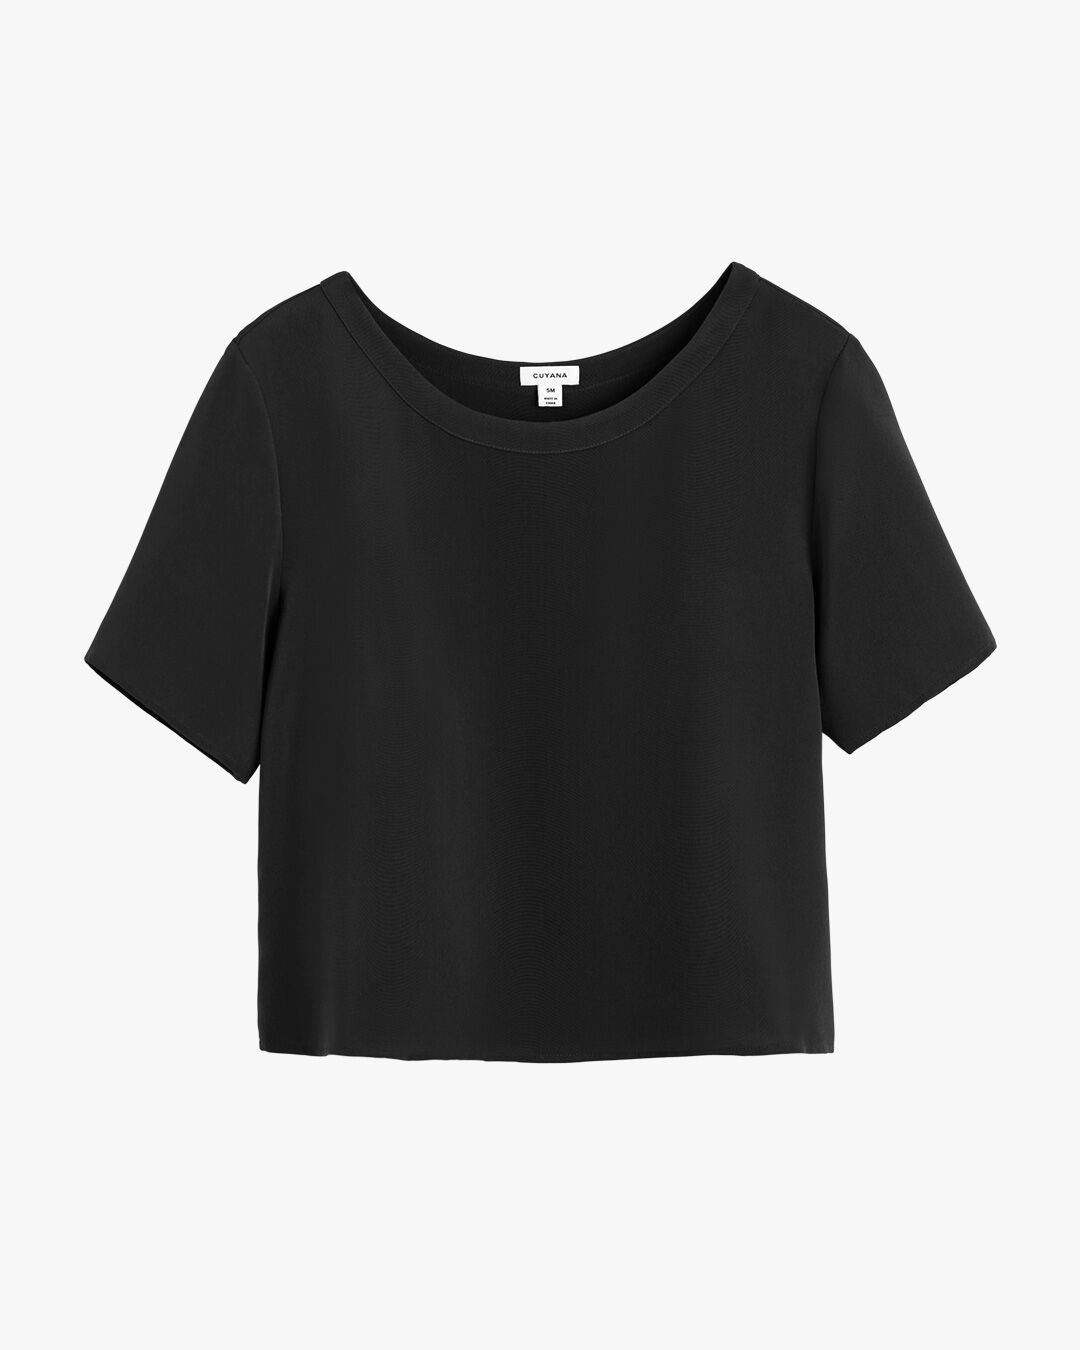 Black plain crop t shirt, Cropped t shirts women